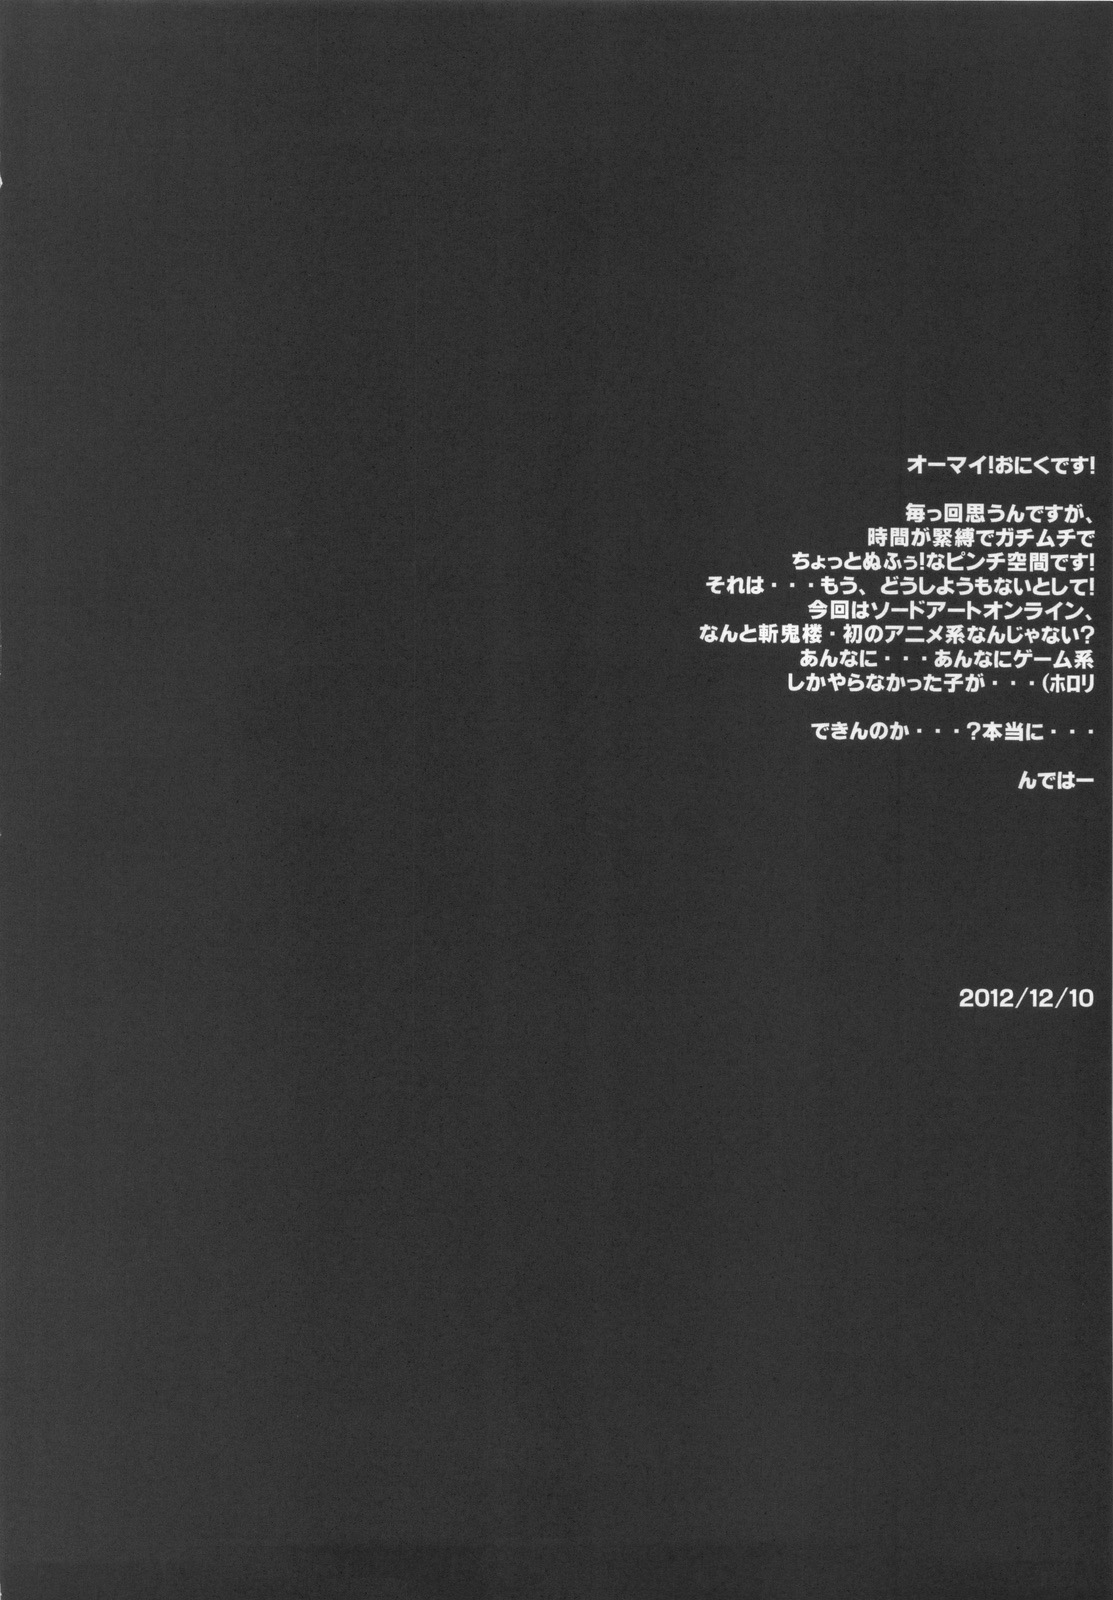 (COMIC1☆7) [斬鬼楼 (おにぎりくん)] PILE EDGE CONCEPTION [NEXUS] (ソードアート・オンライン) [英訳]